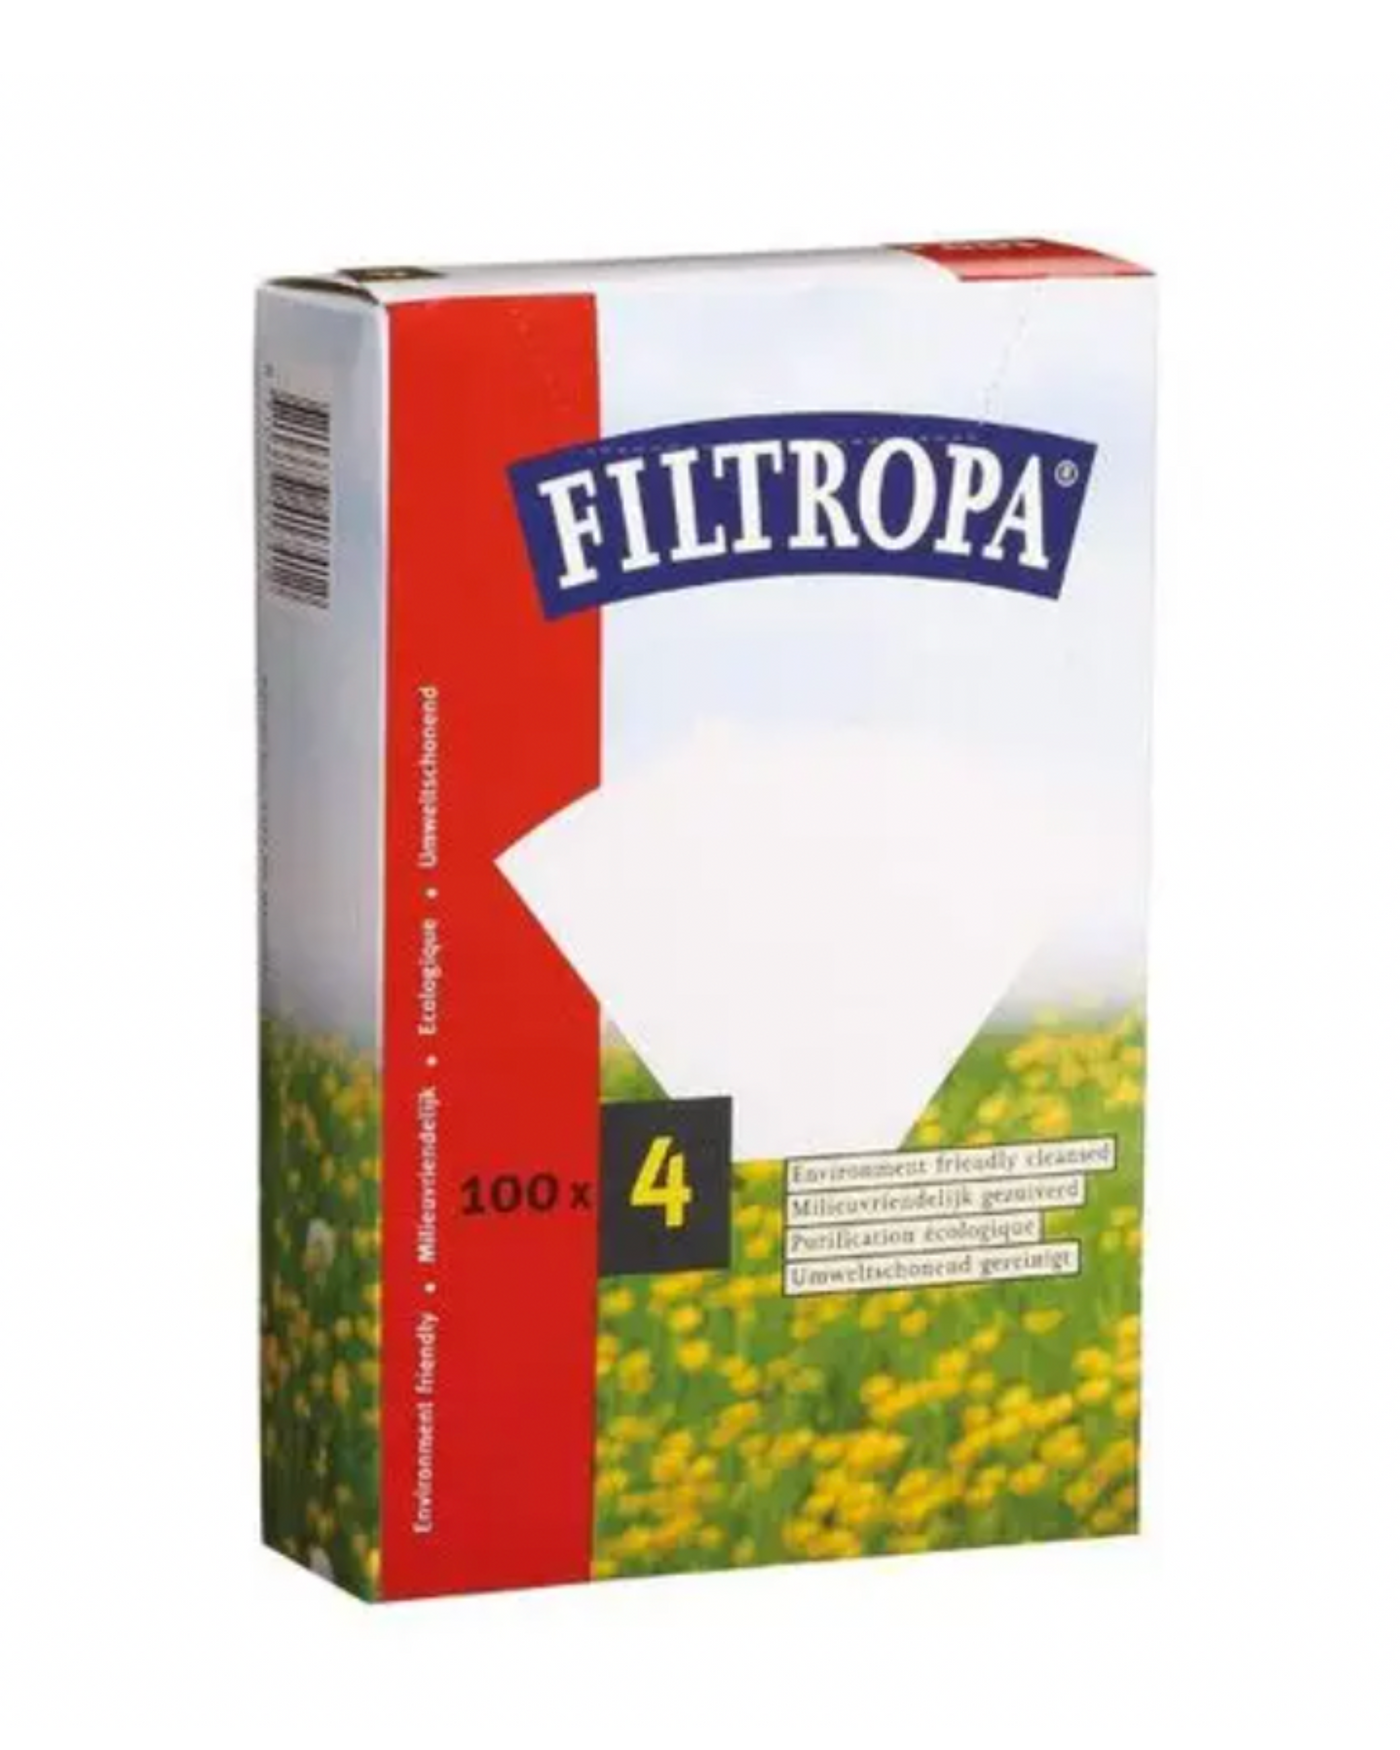 Filtropa Filter Paper #4